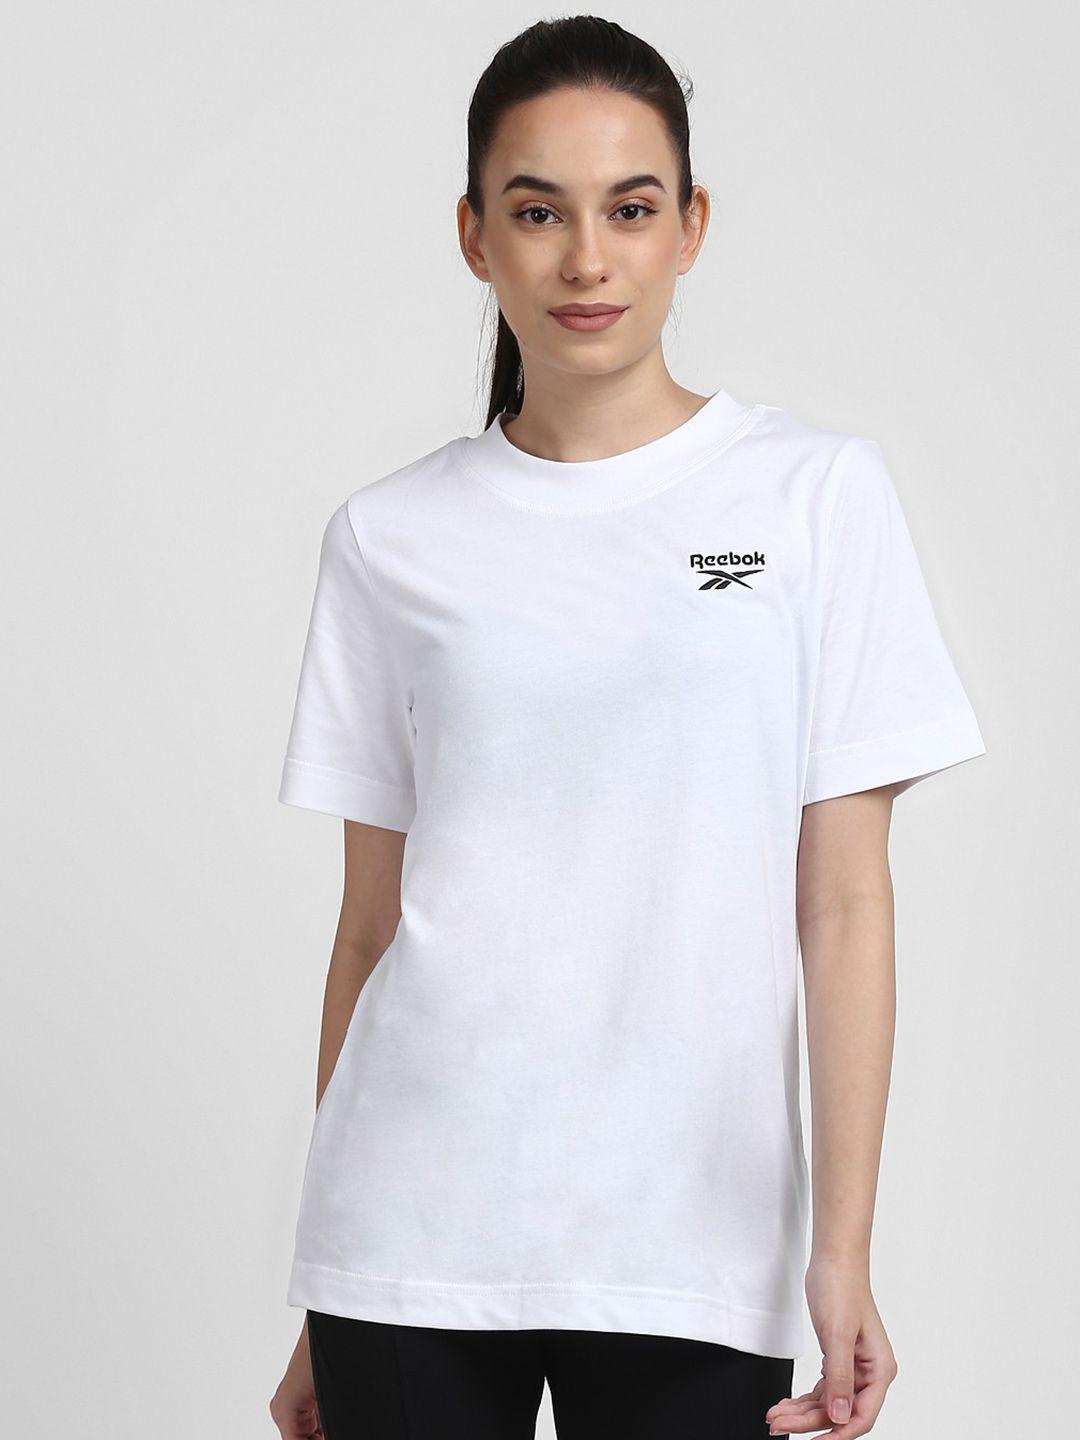 reebok-women-white-brand-logo-printed-pure-cotton-training-or-gym-pure-cotton-t-shirt